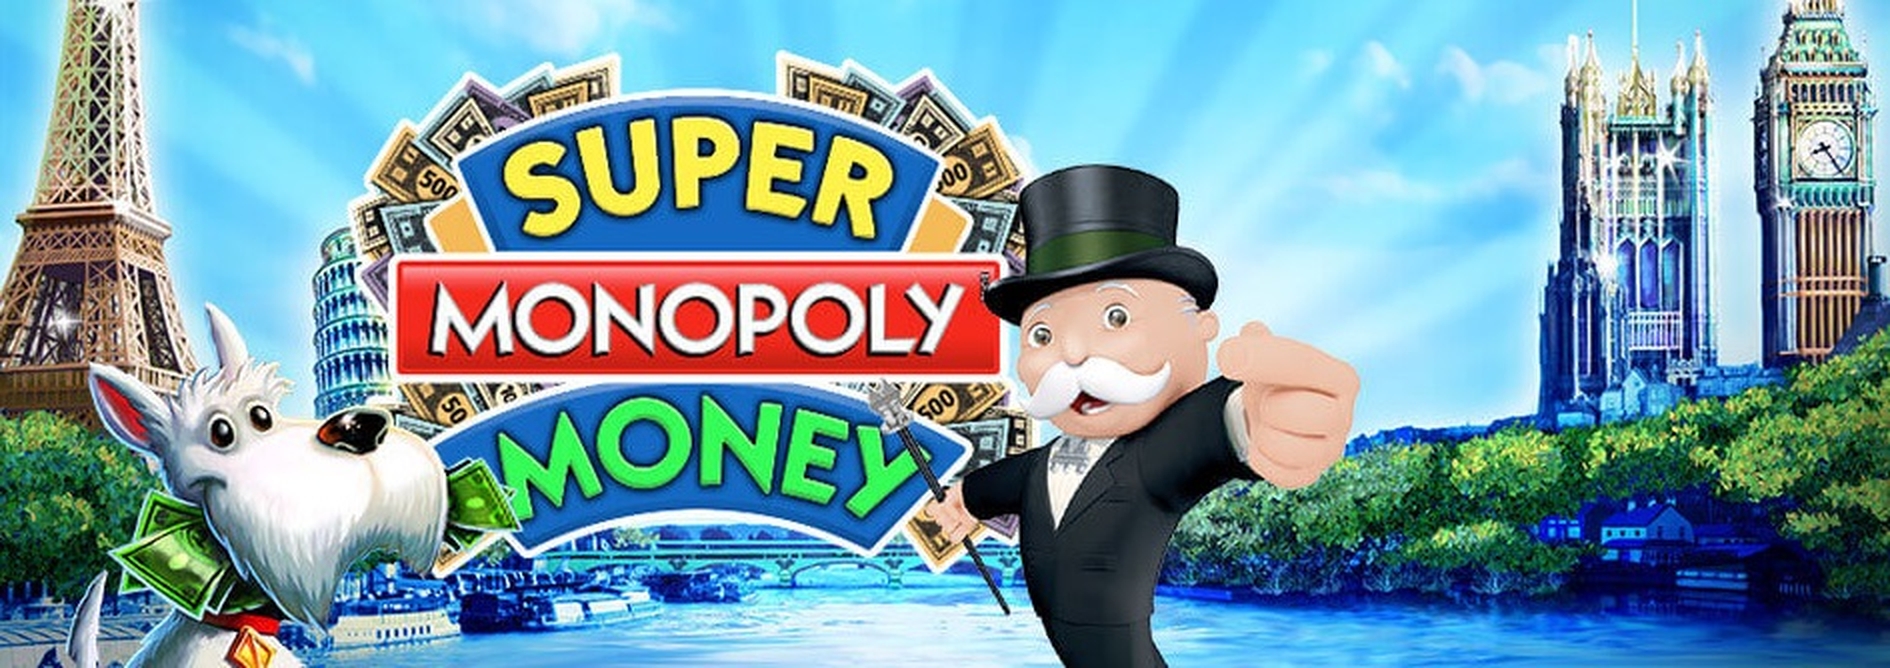 Super MONOPOLY Money